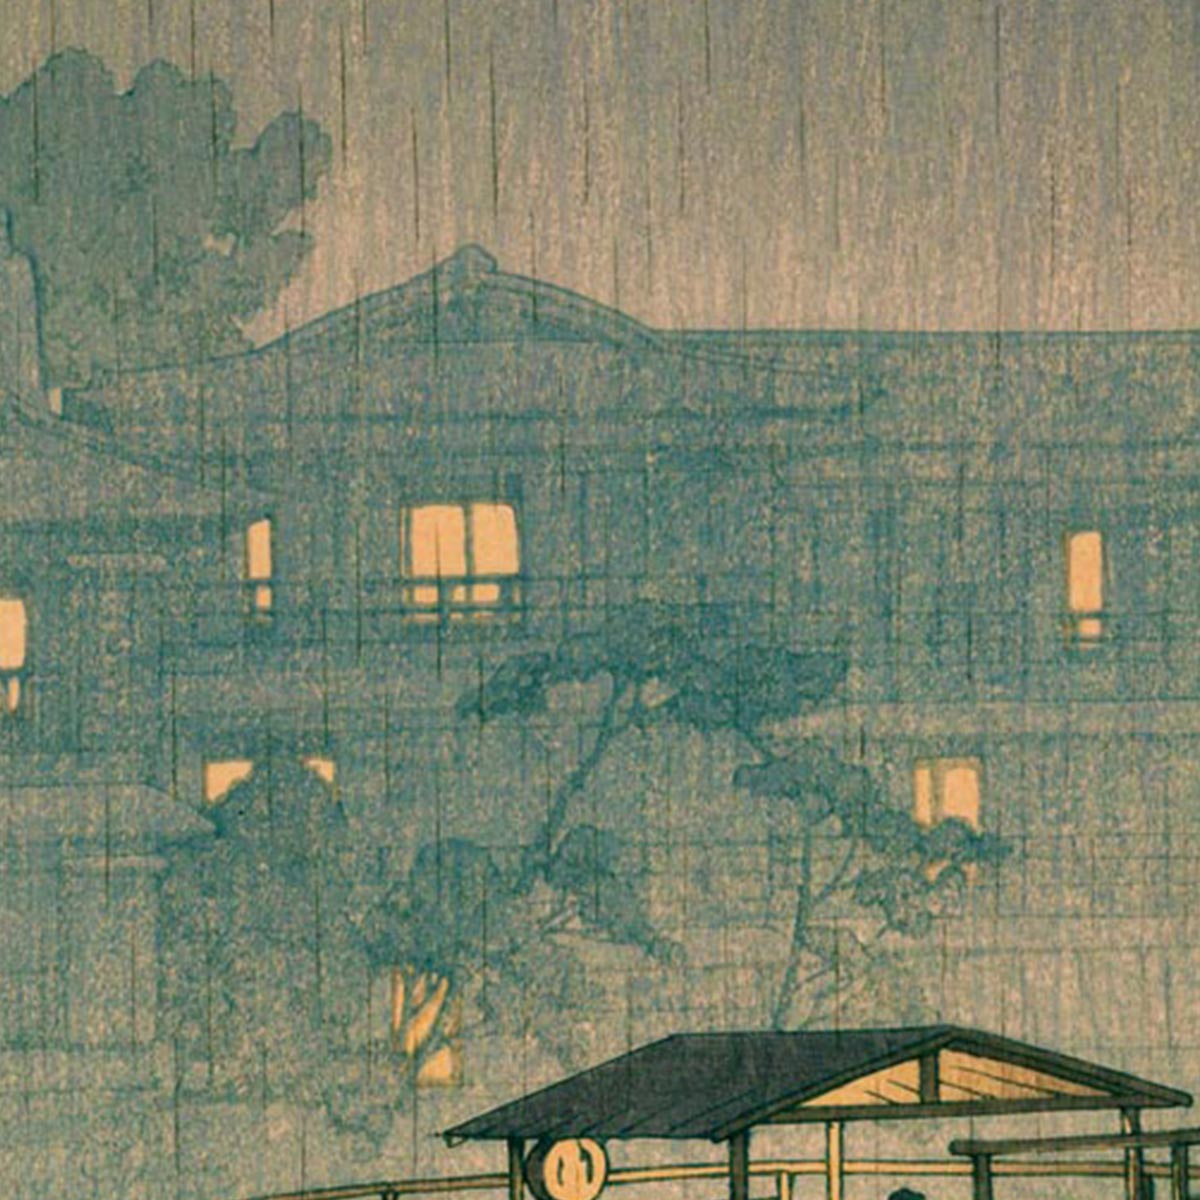 Shuzenji in Rain Art Print by Hasui